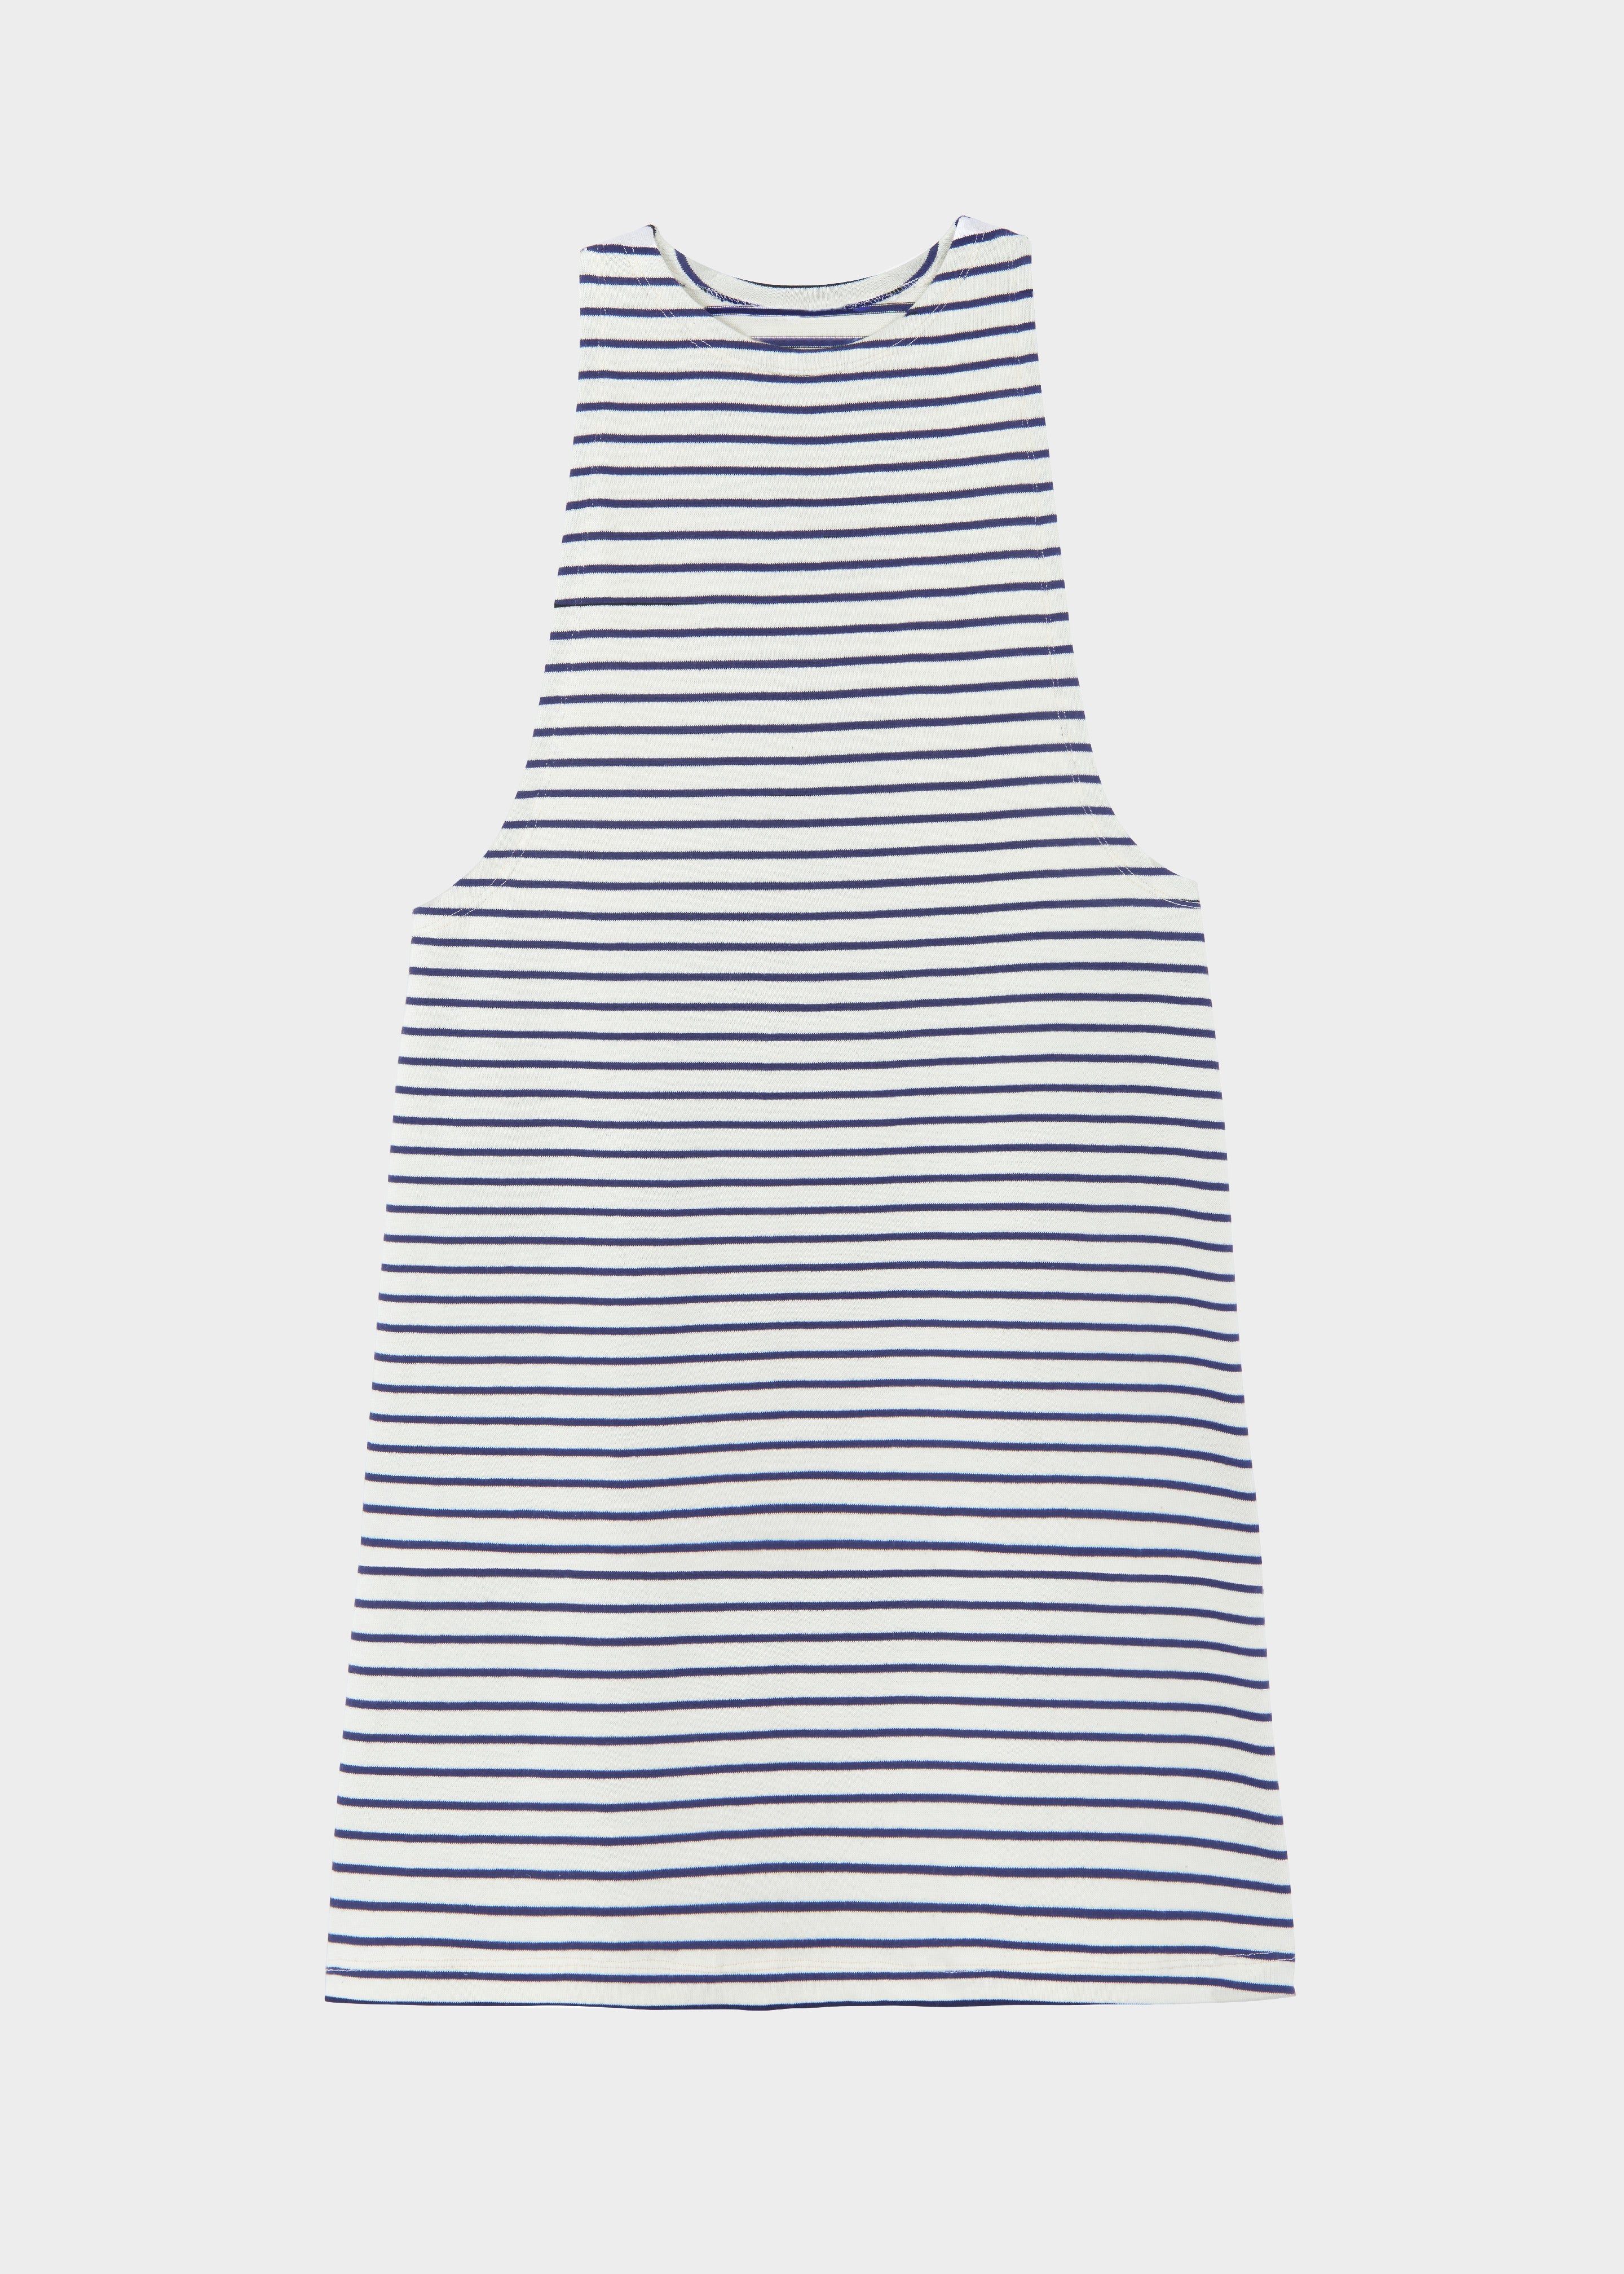 Lindsay Halter Dress - Navy Stripe - 10